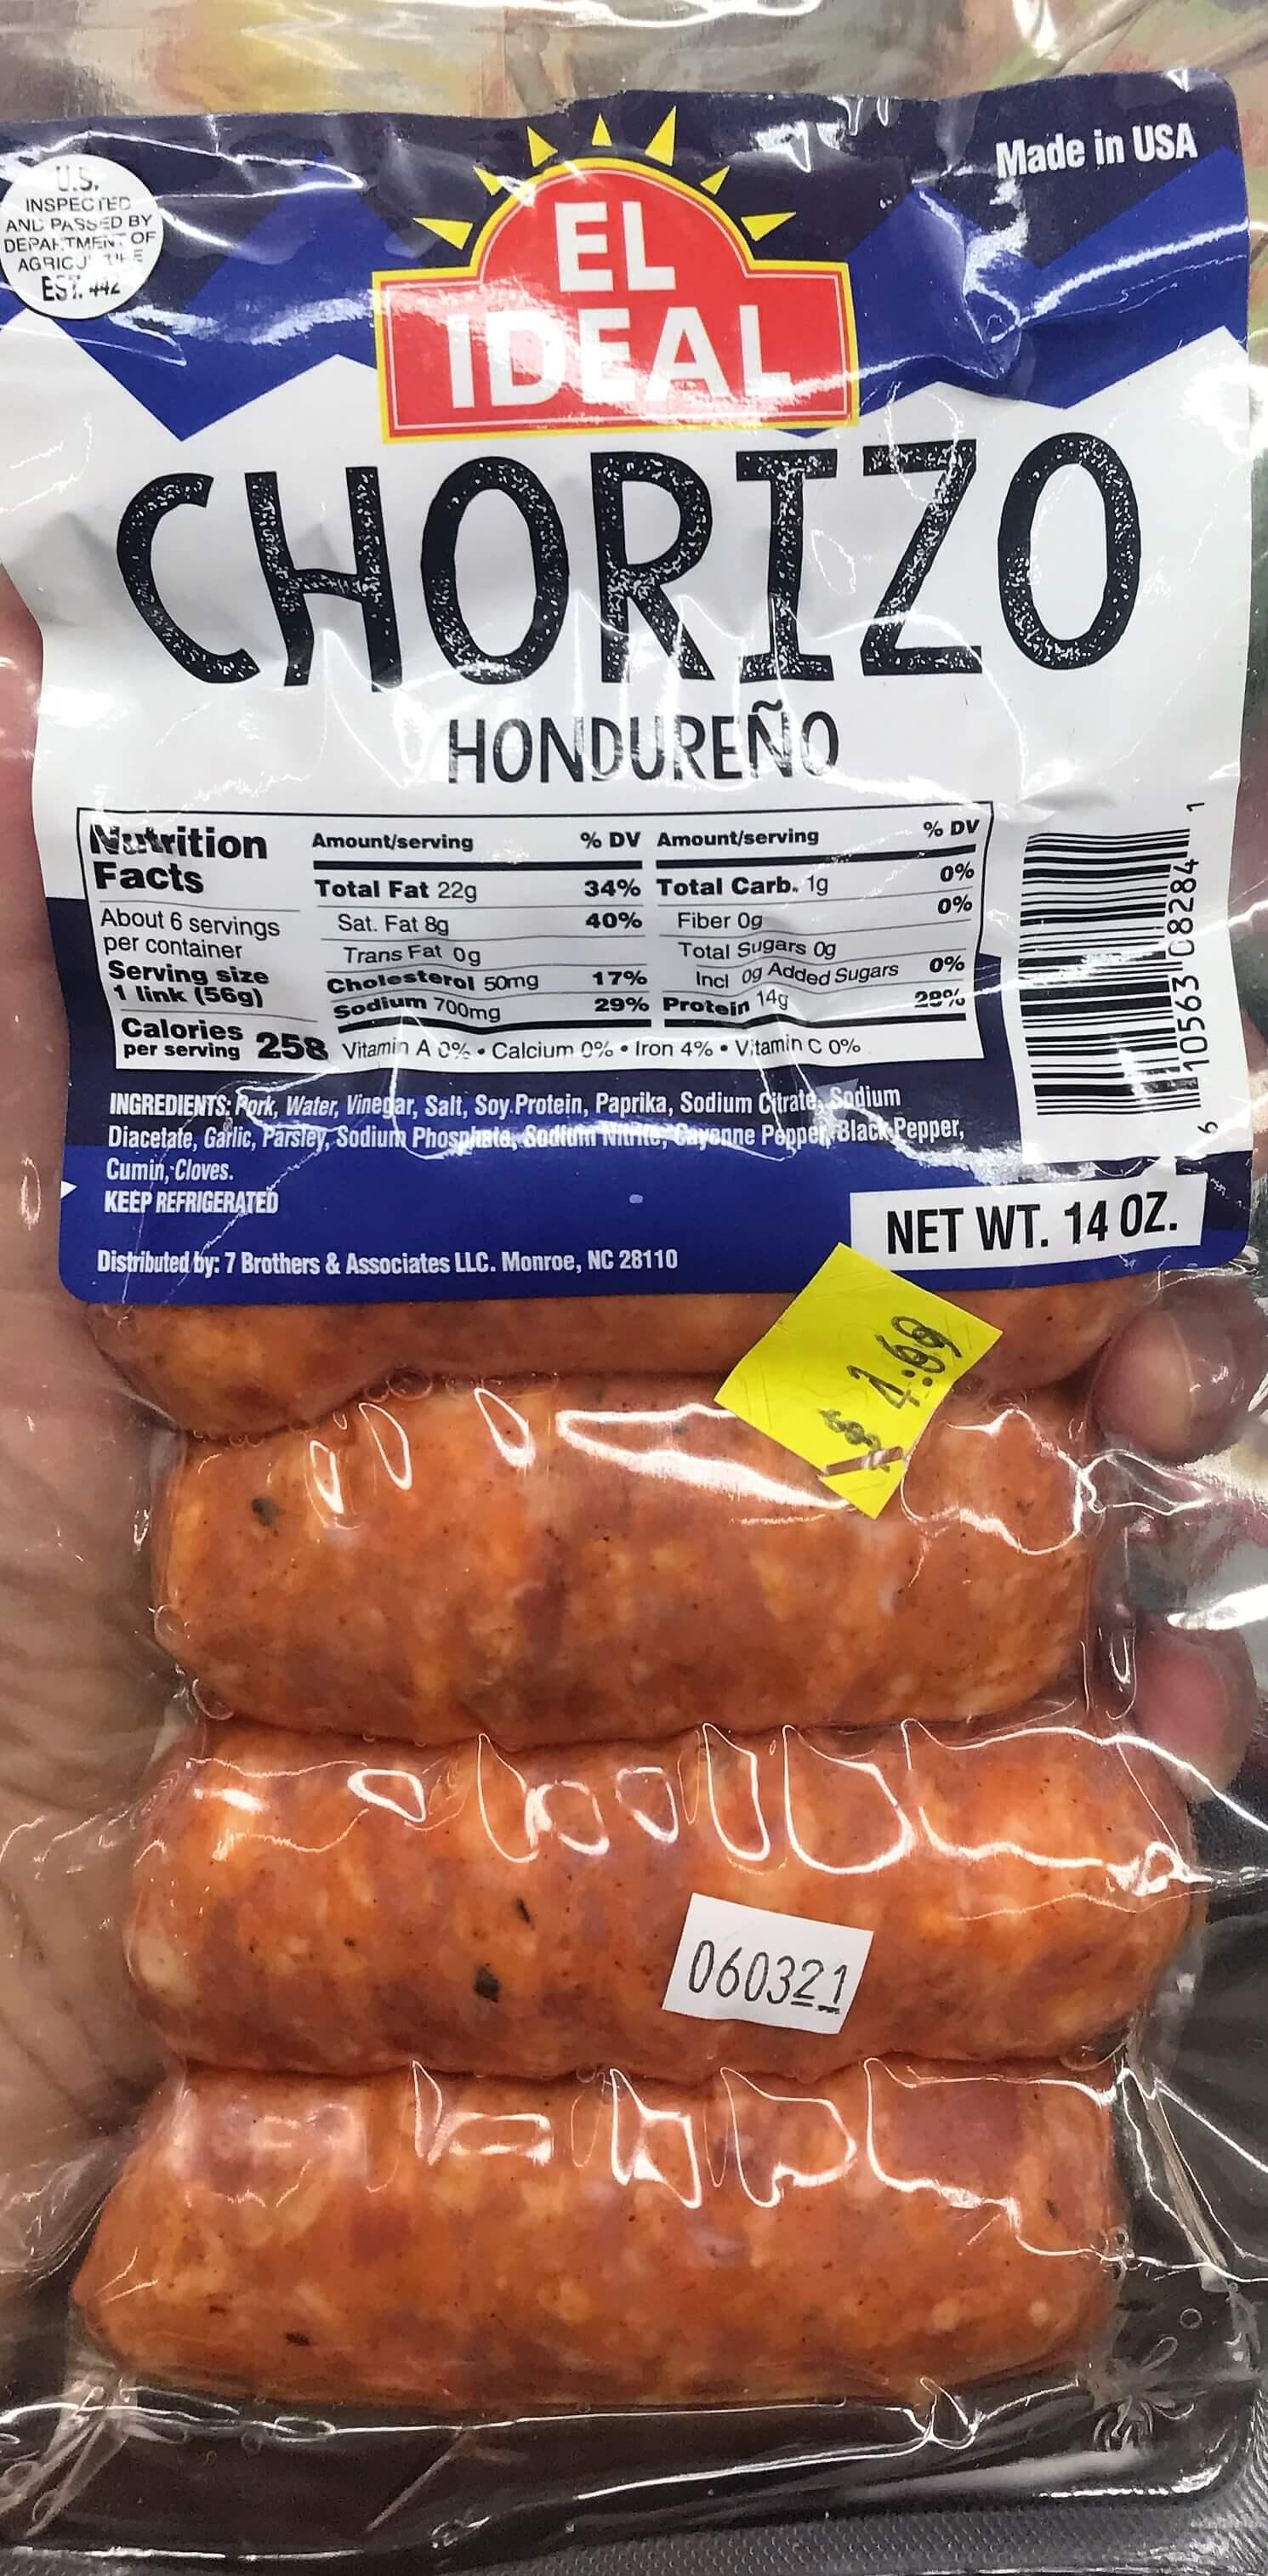 El Ideal - Sausage Hondureño 6units.